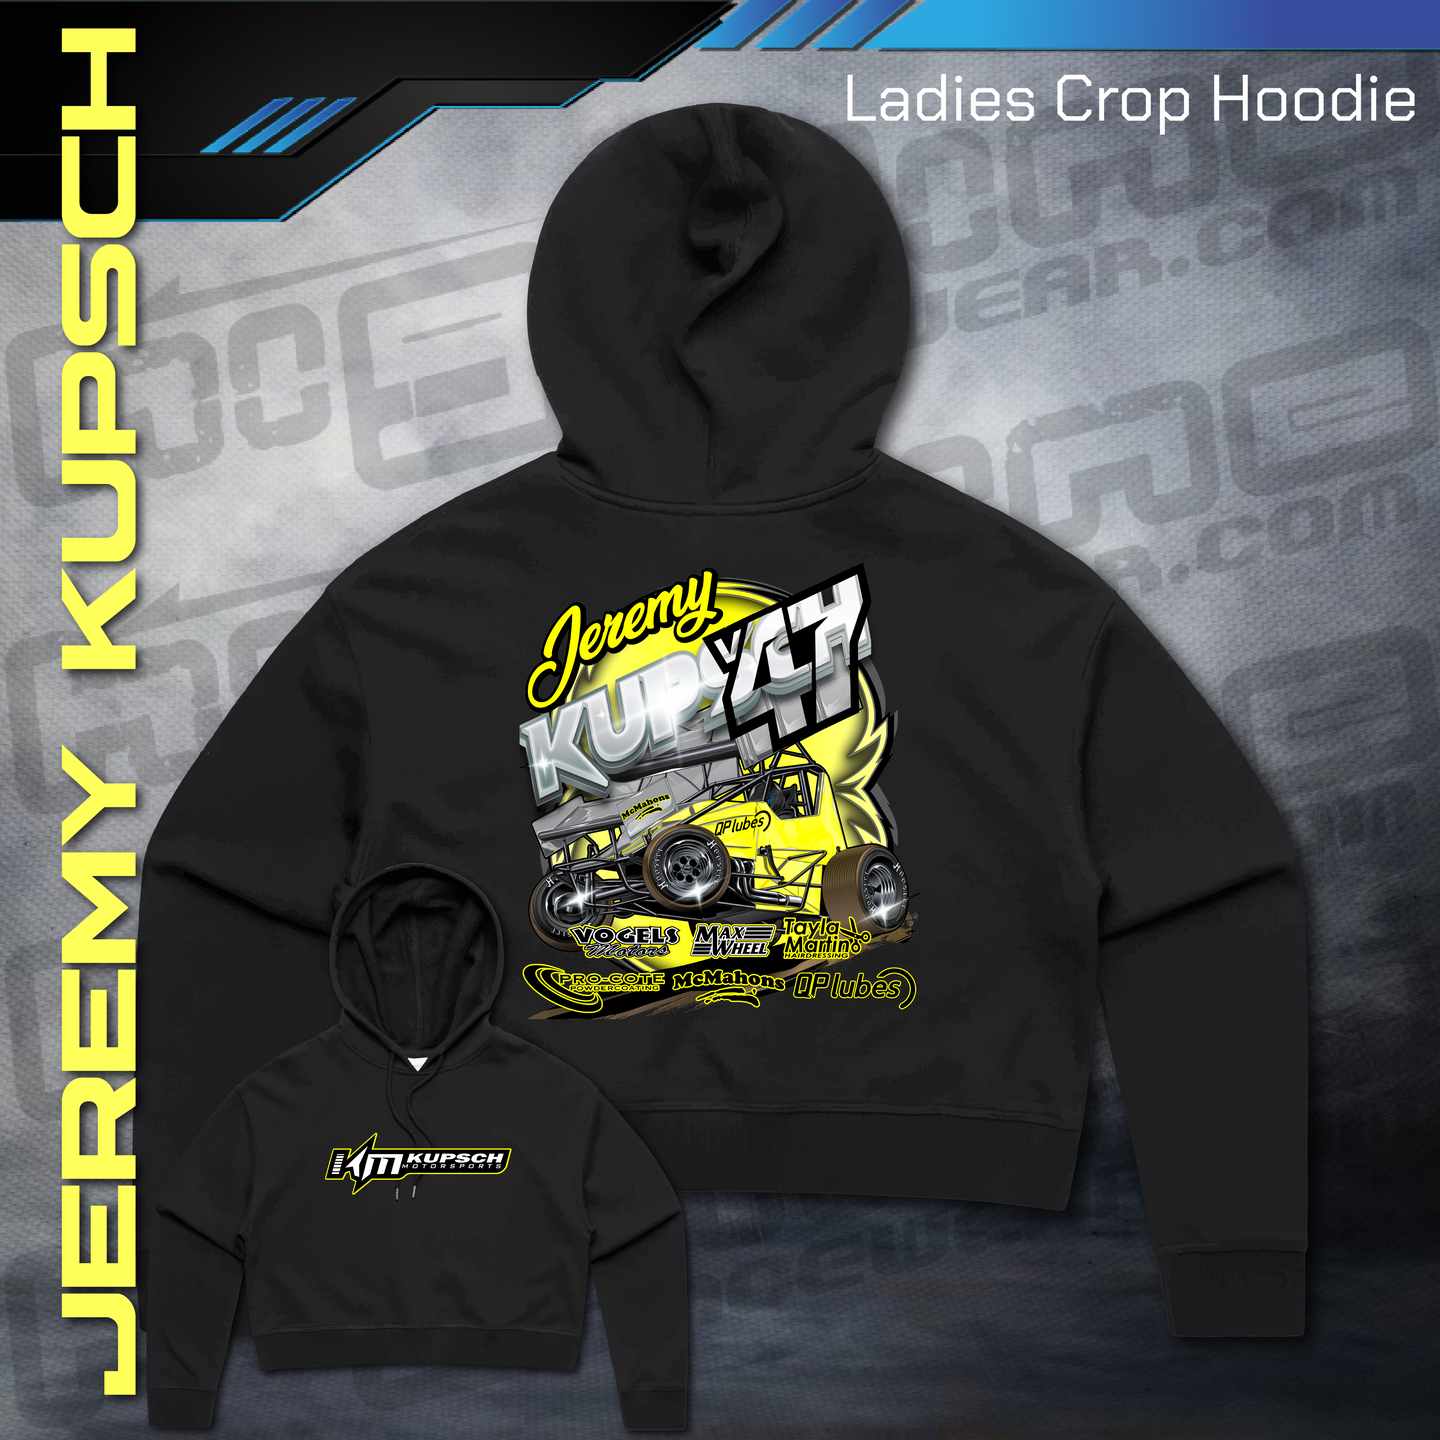 Ladies Crop Hoodie - Jeremy Kupsch